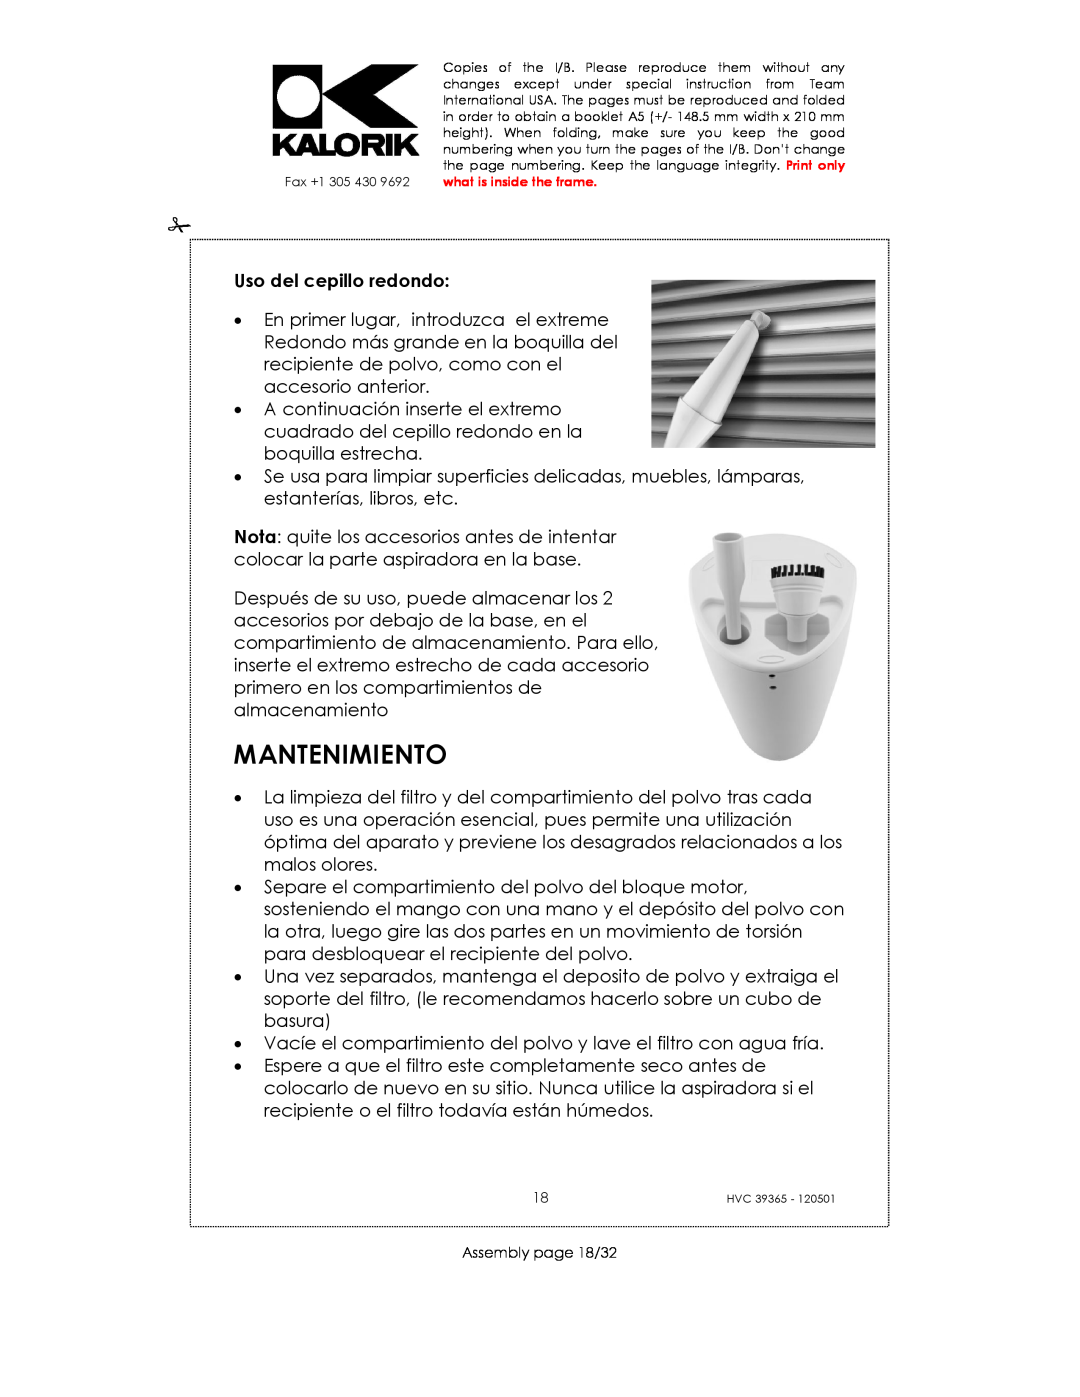 Kalorik HVC 39365 manual Mantenimiento, Uso del cepillo redondo 